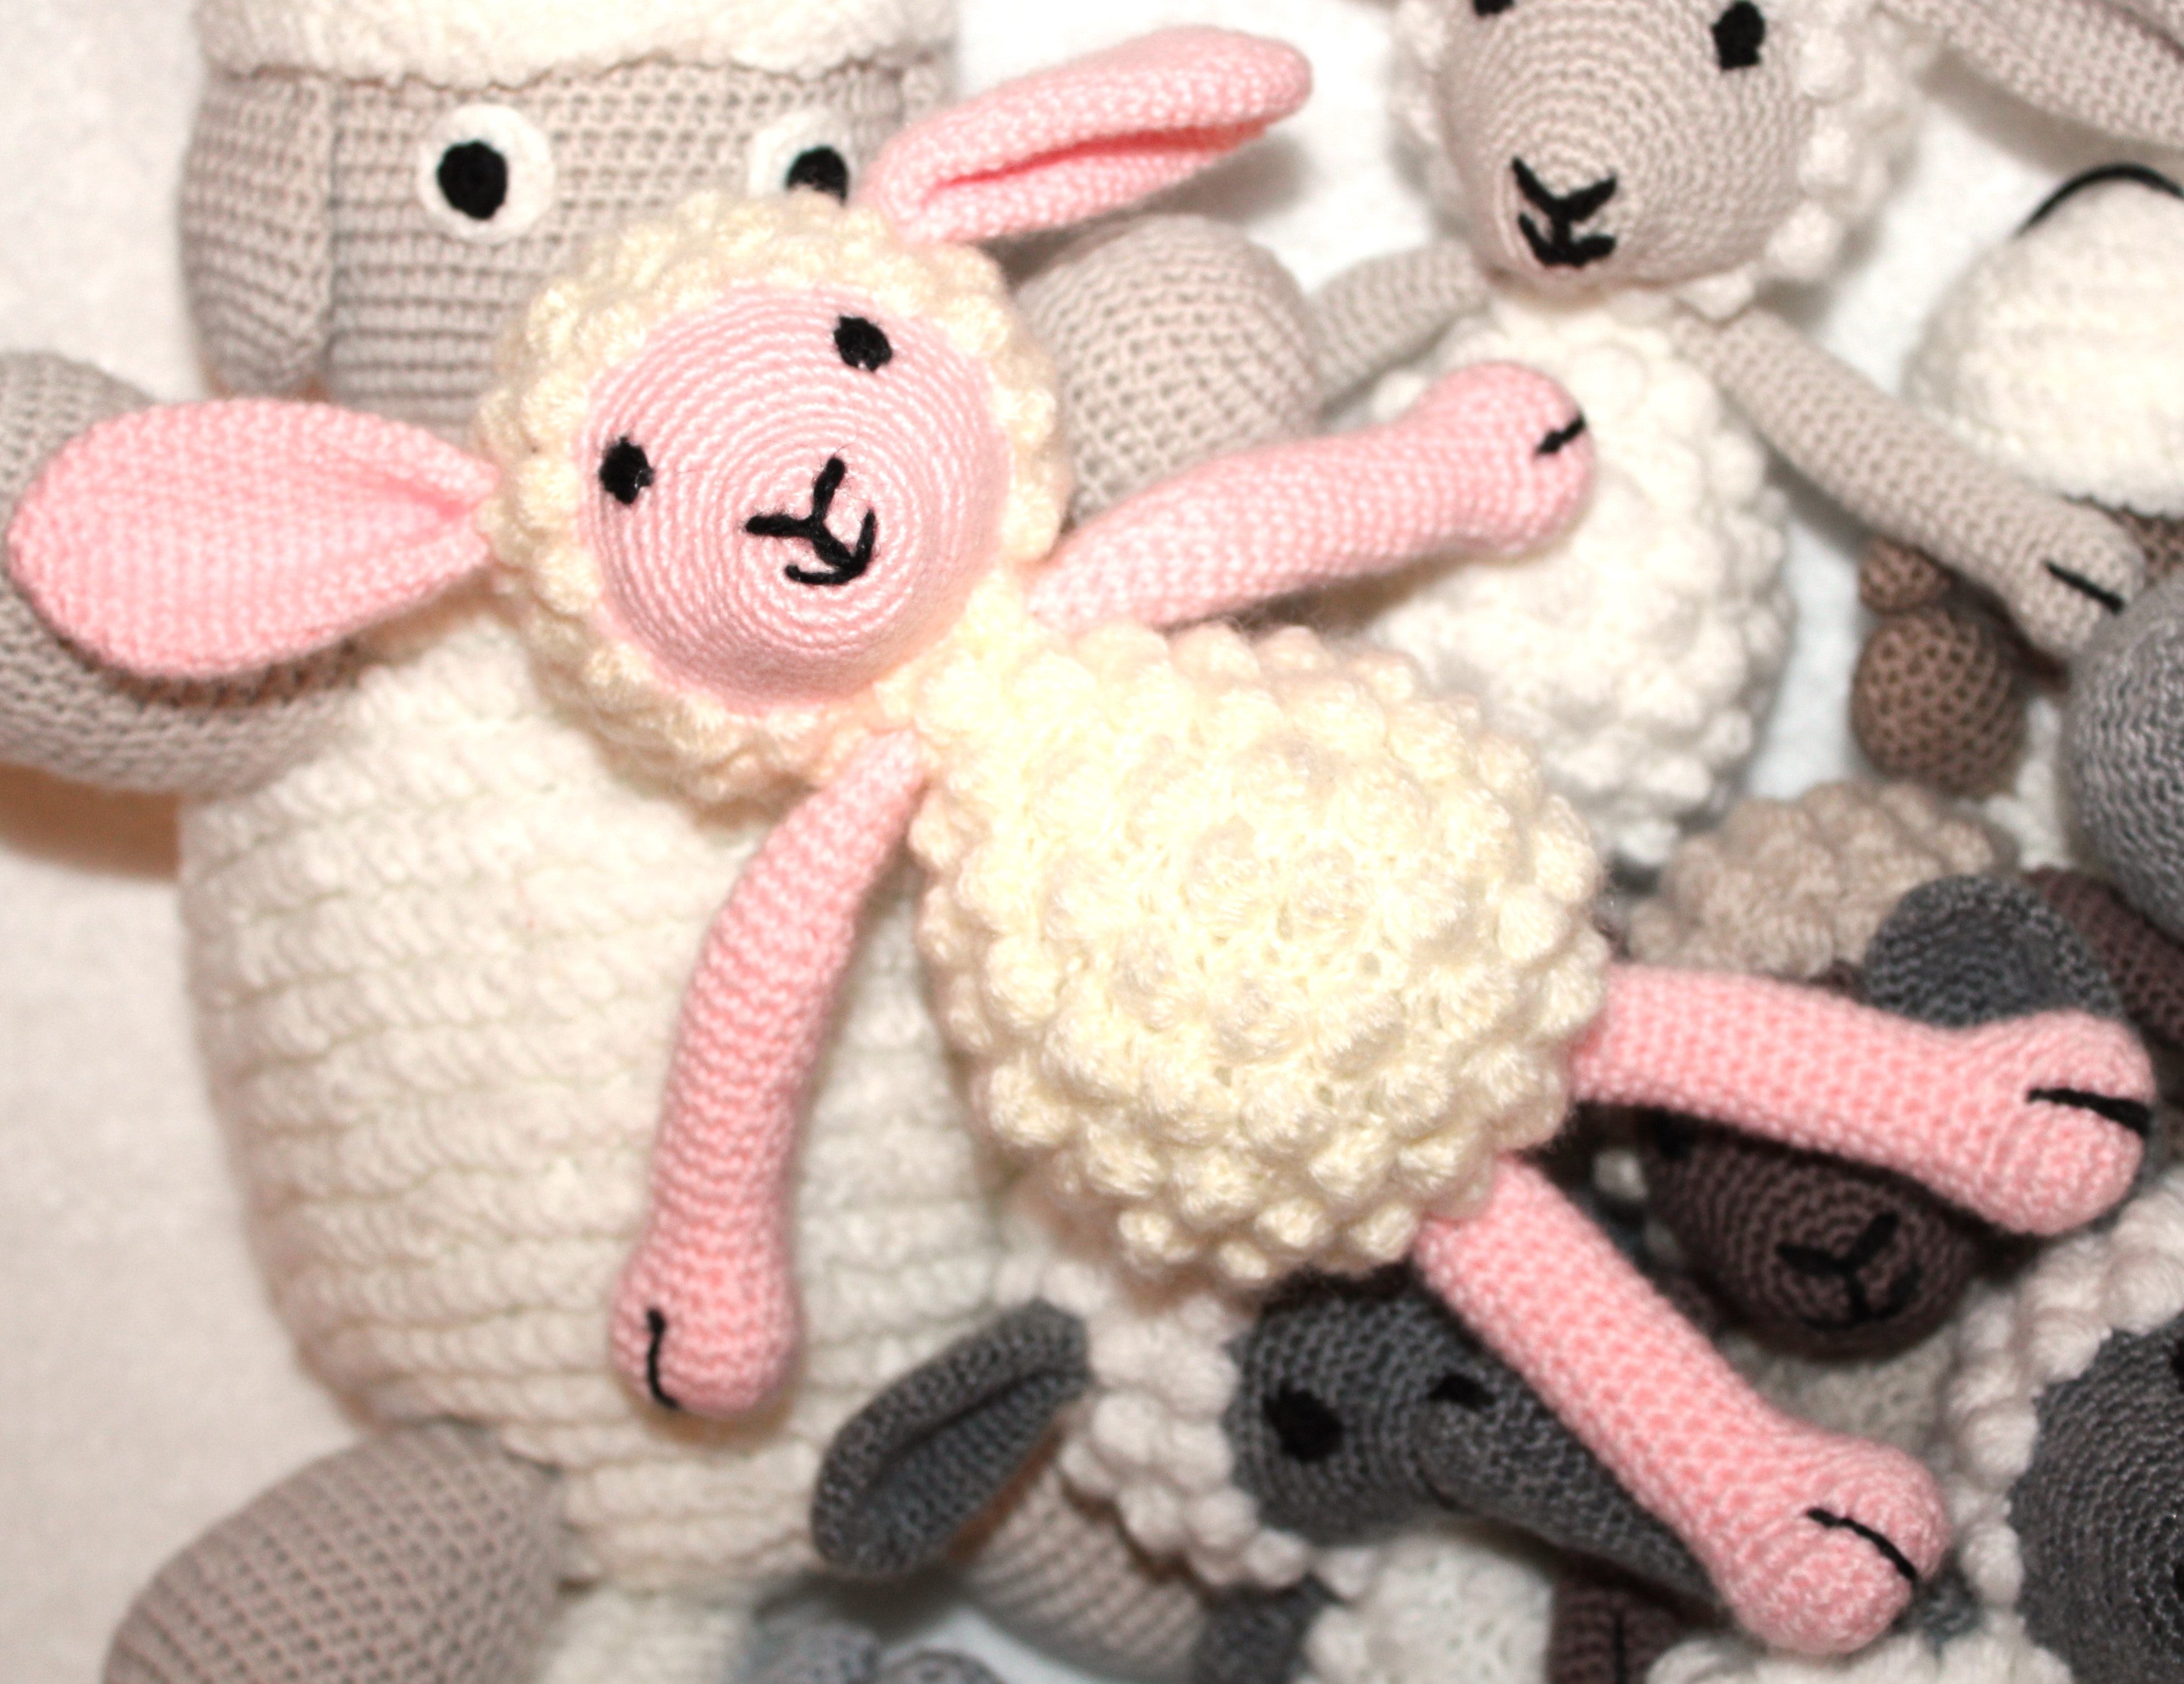 Medium Crochet Sheep by OAK Charity